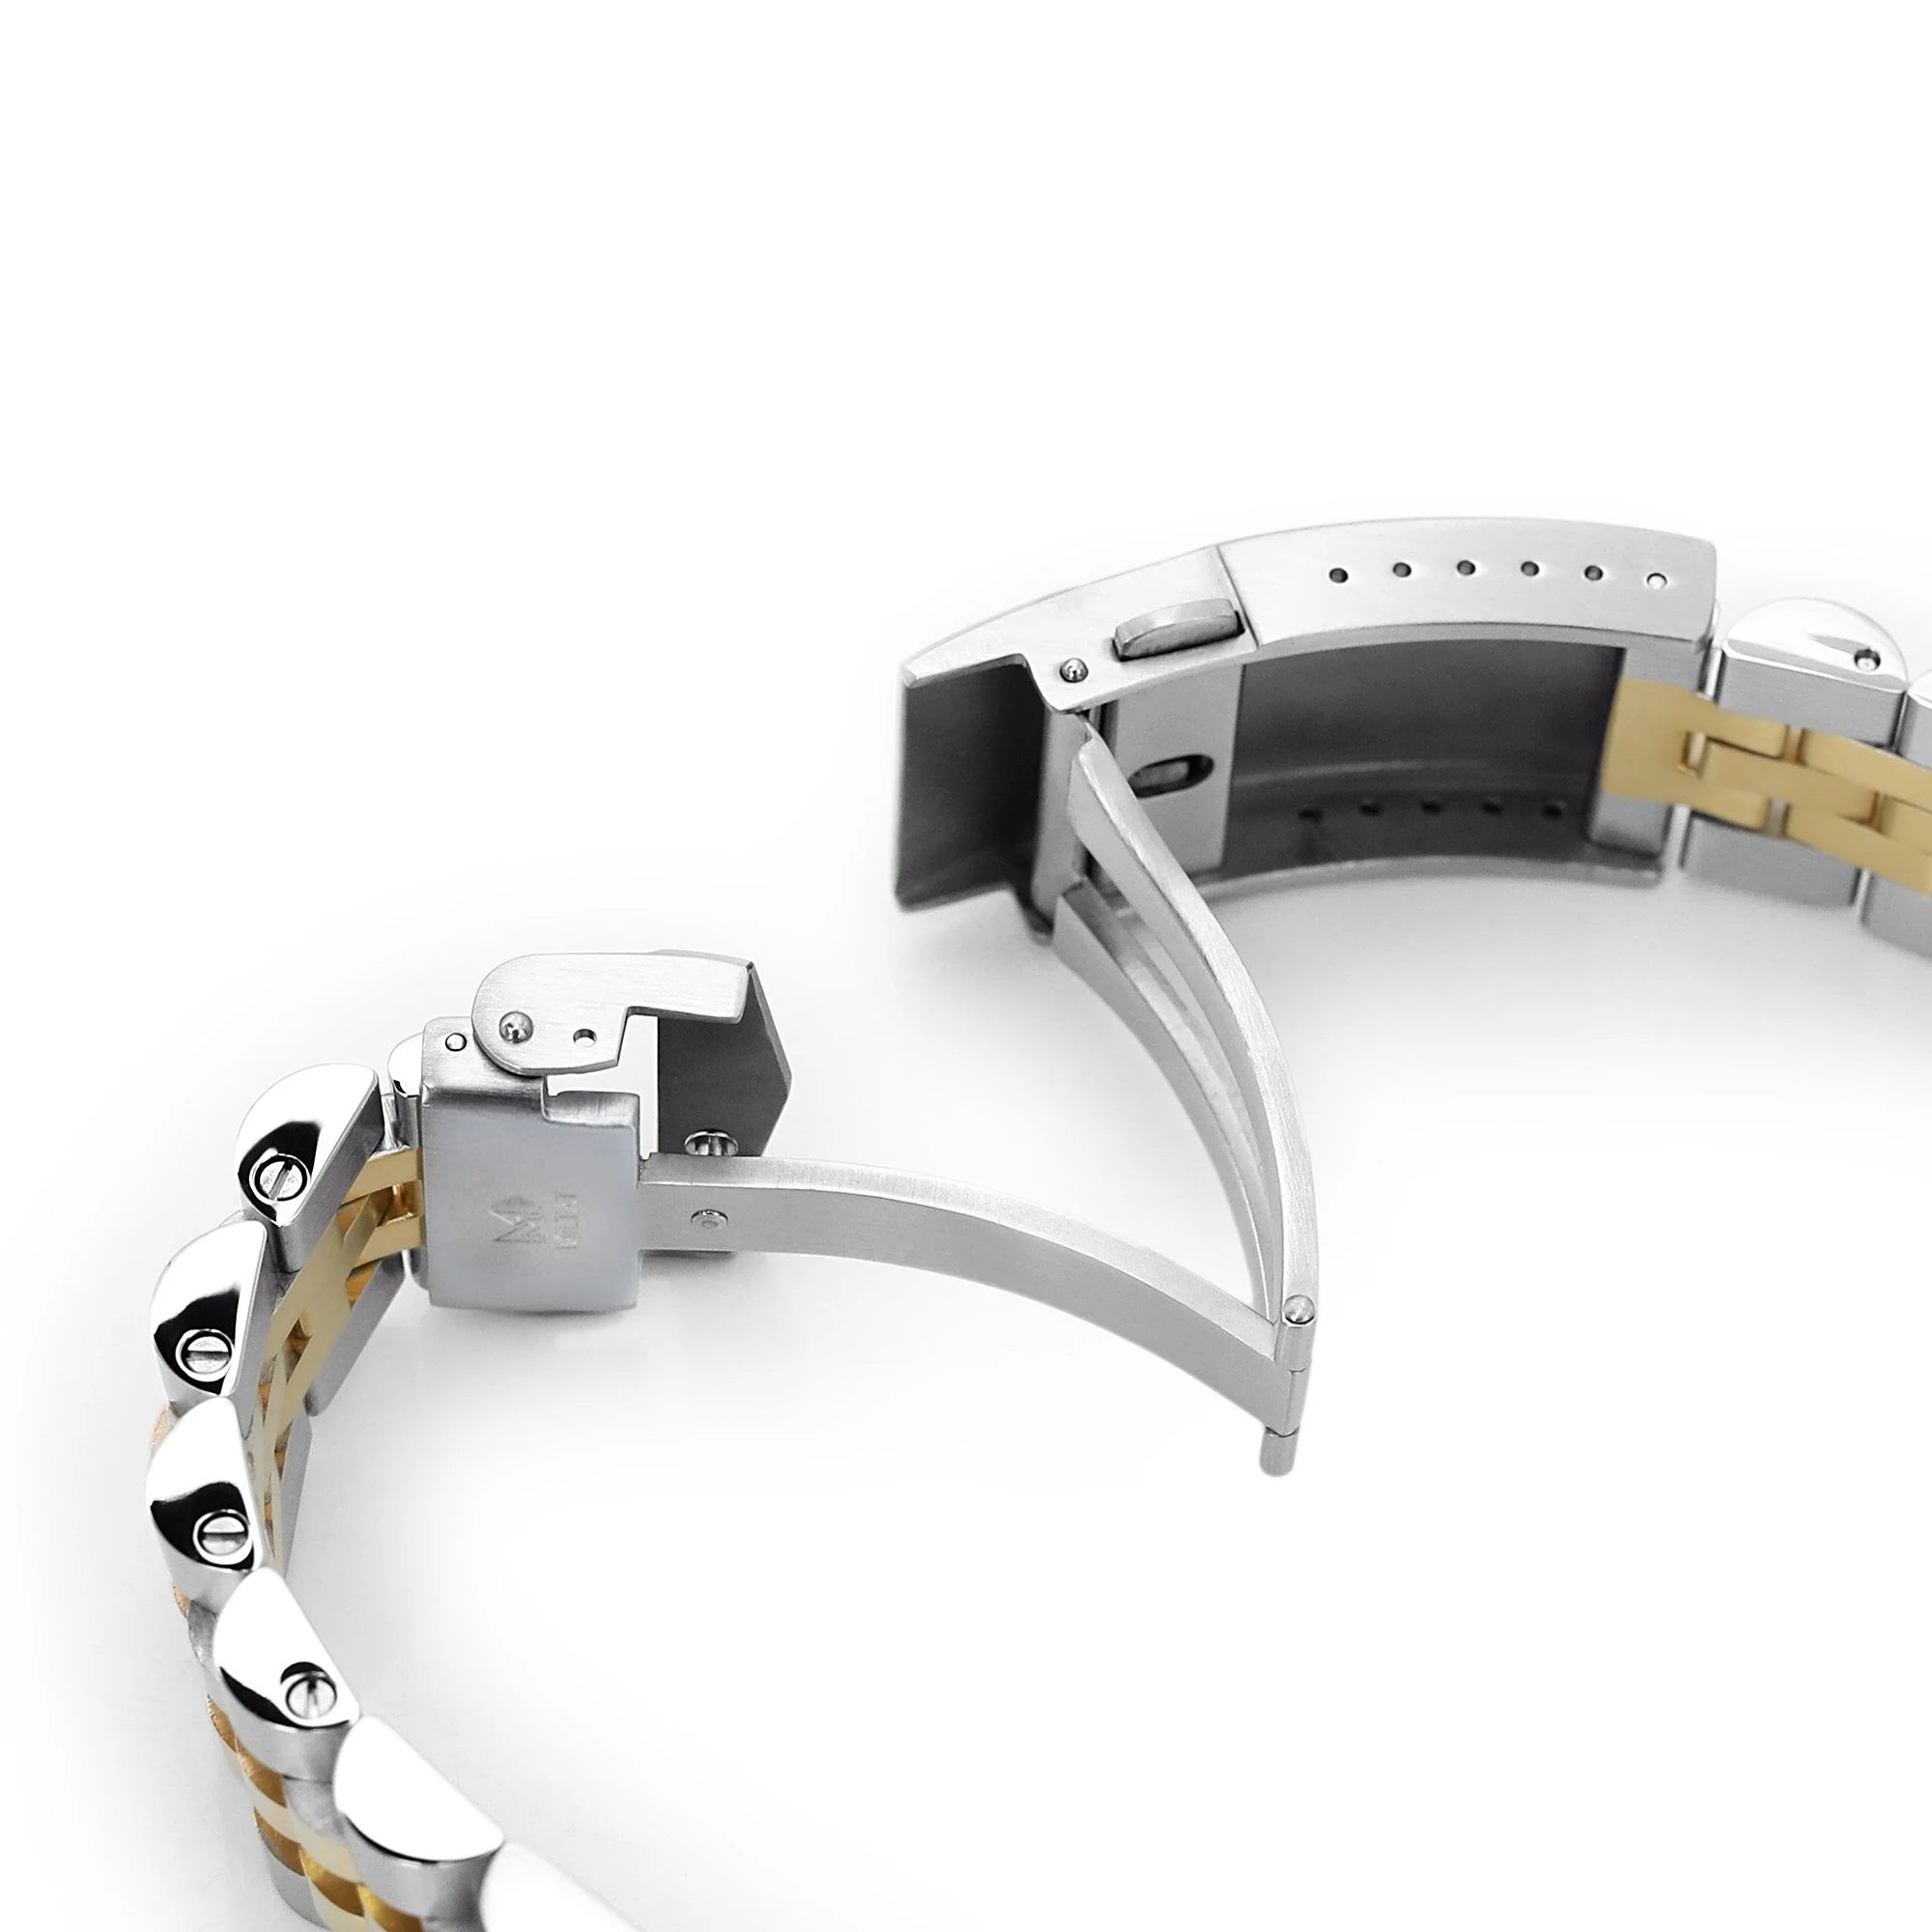 [STRAPCODE] Angus-J Jub Louis Bracelet for Seiko SARB035 - Silver / Gold